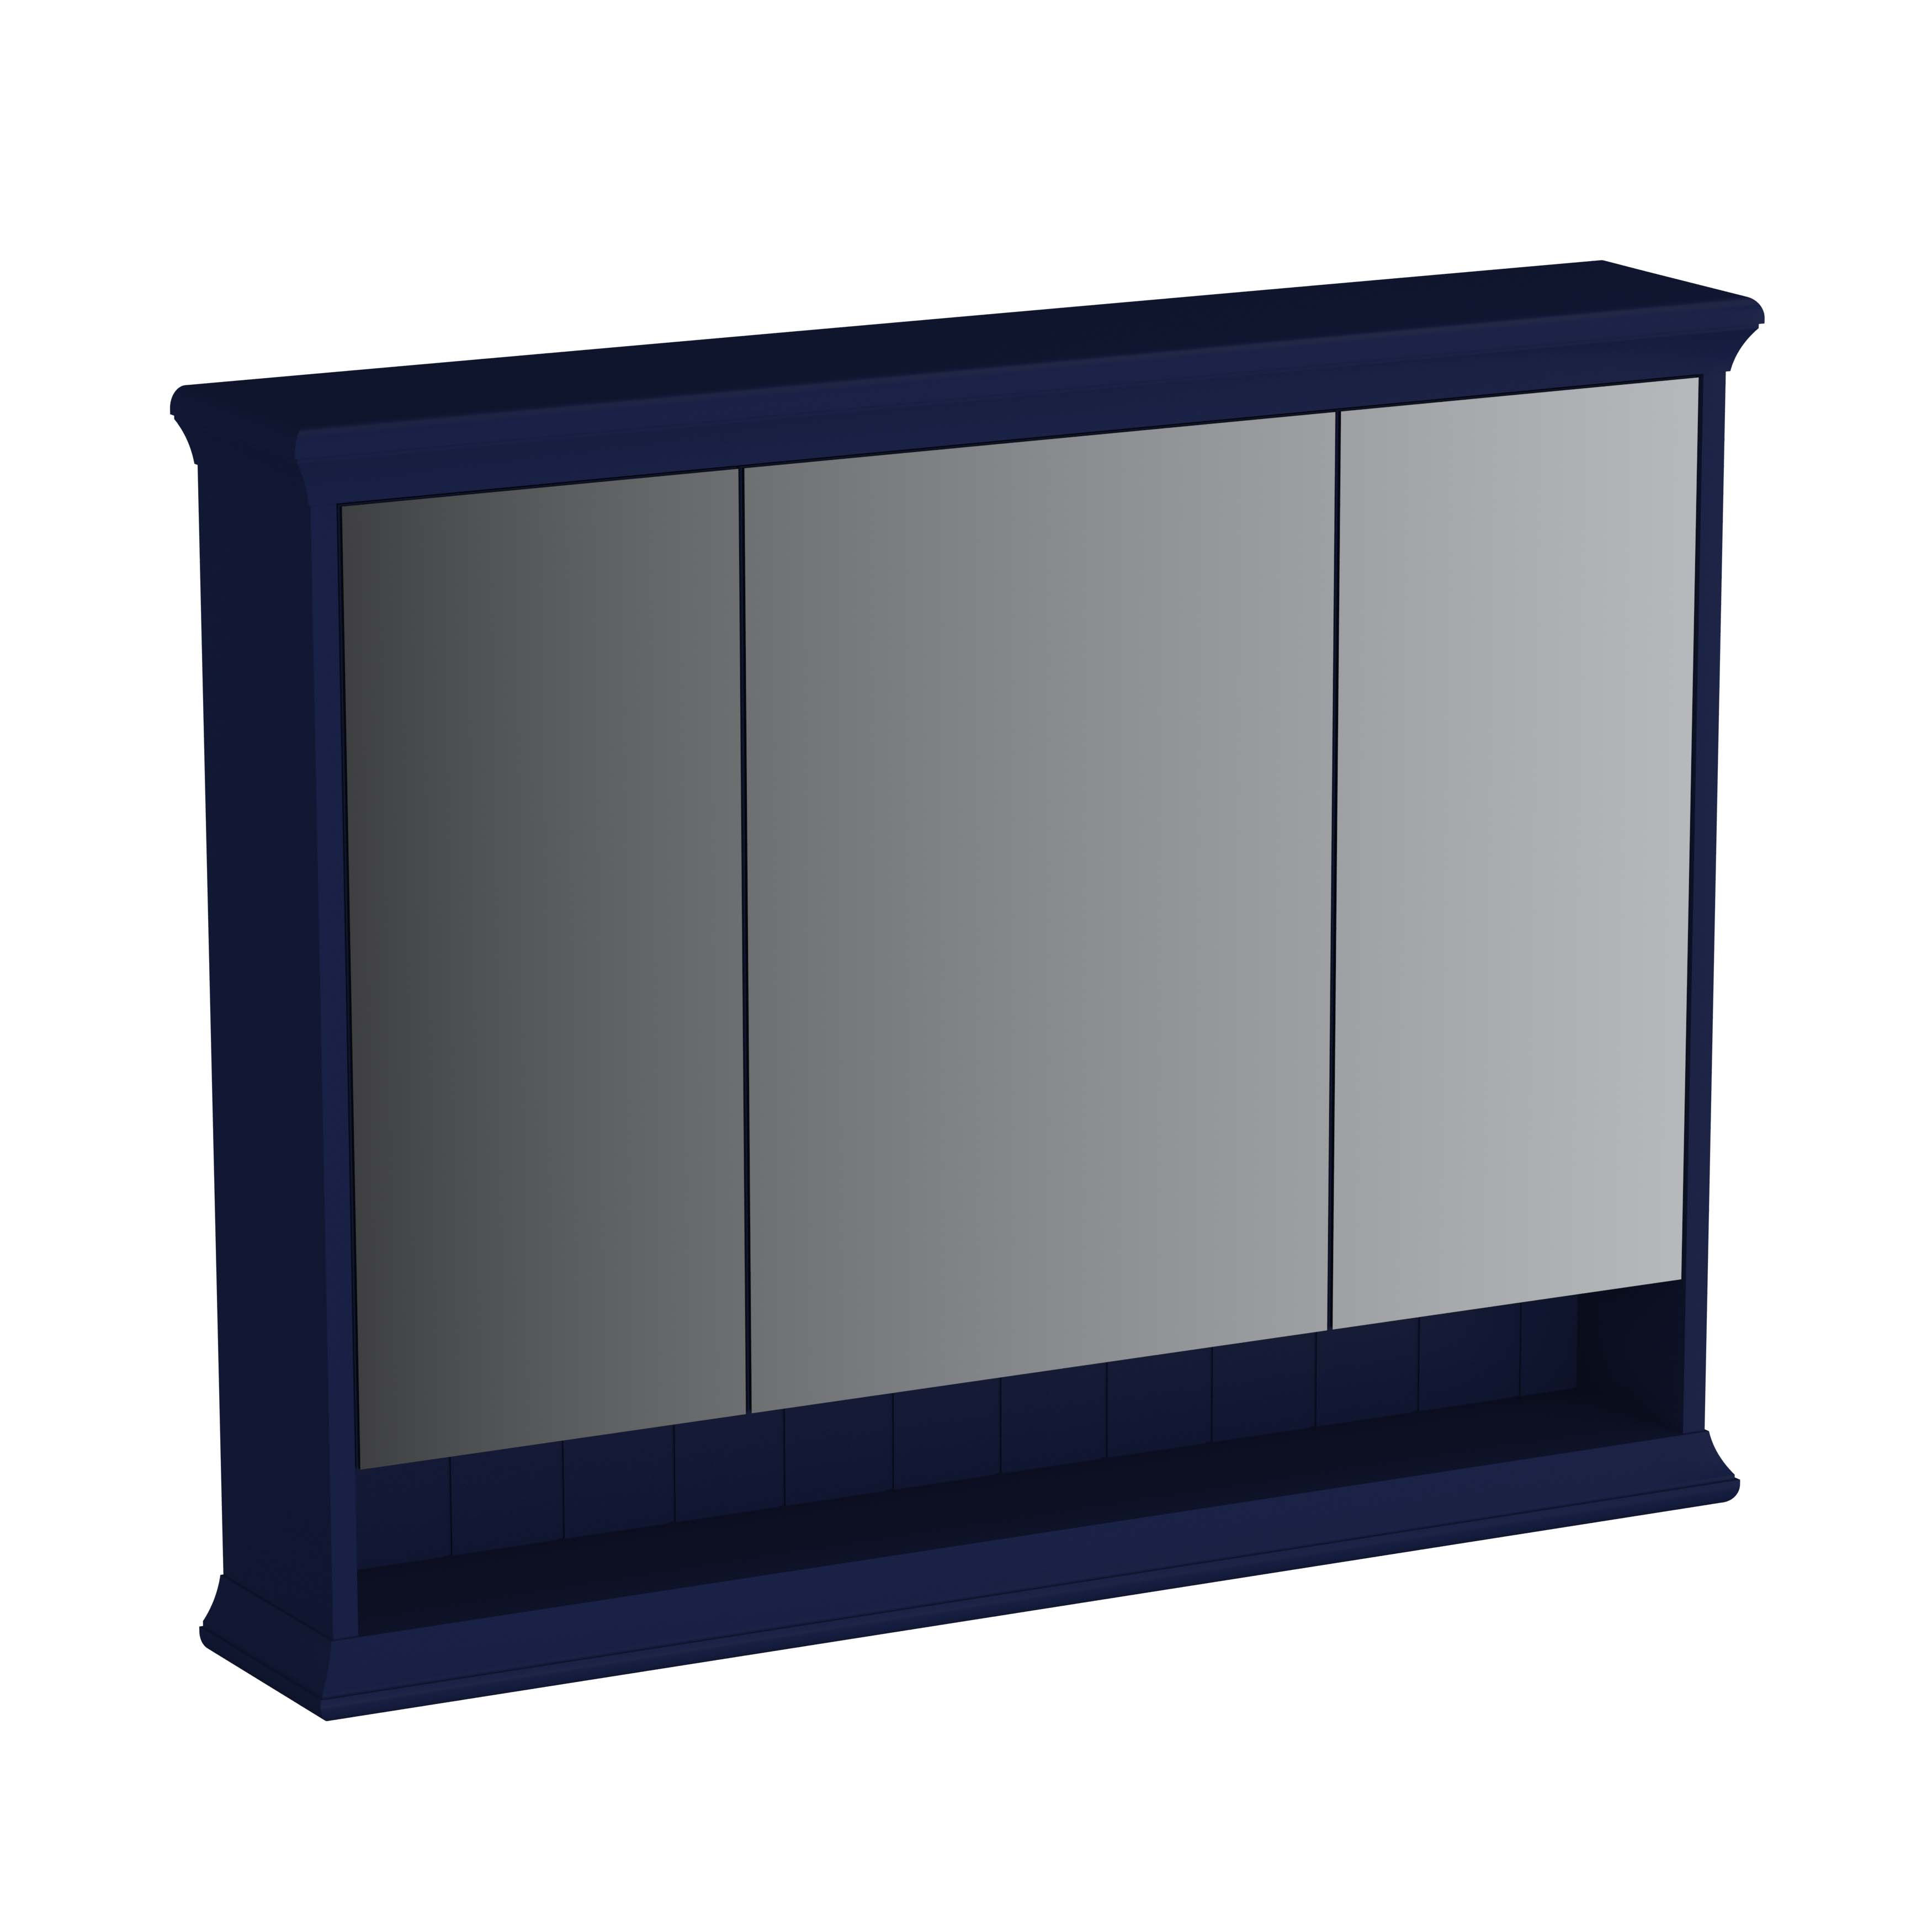 Valarte LED-Spiegelschrank, 98 cm, 3 Türen, Stahlblau (Lack)